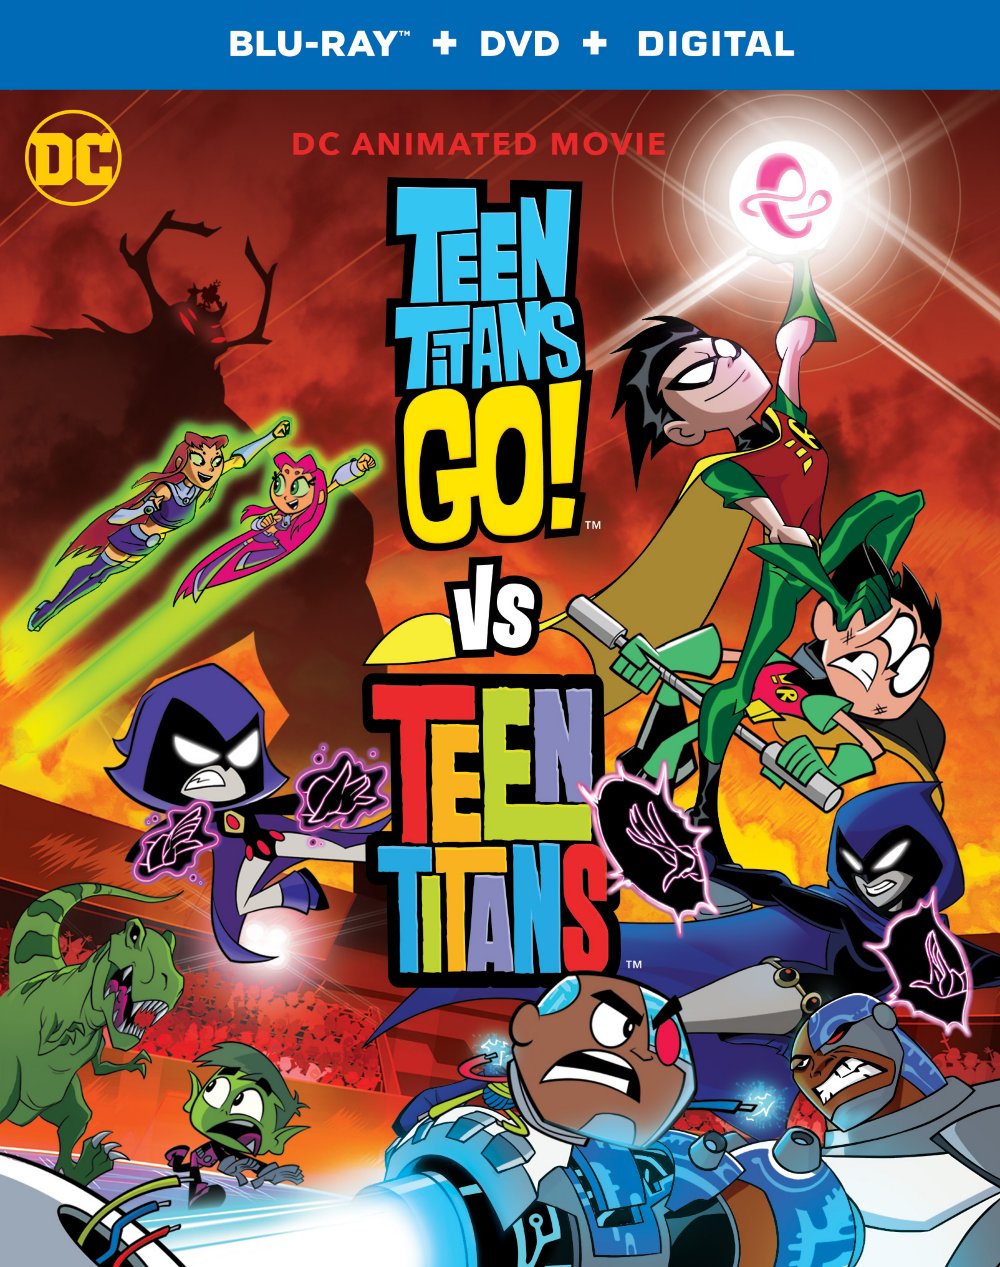 Camp Warner Bros. - Week 5 - Teen Titans Go! Vs. Teen Titans DIY Banks